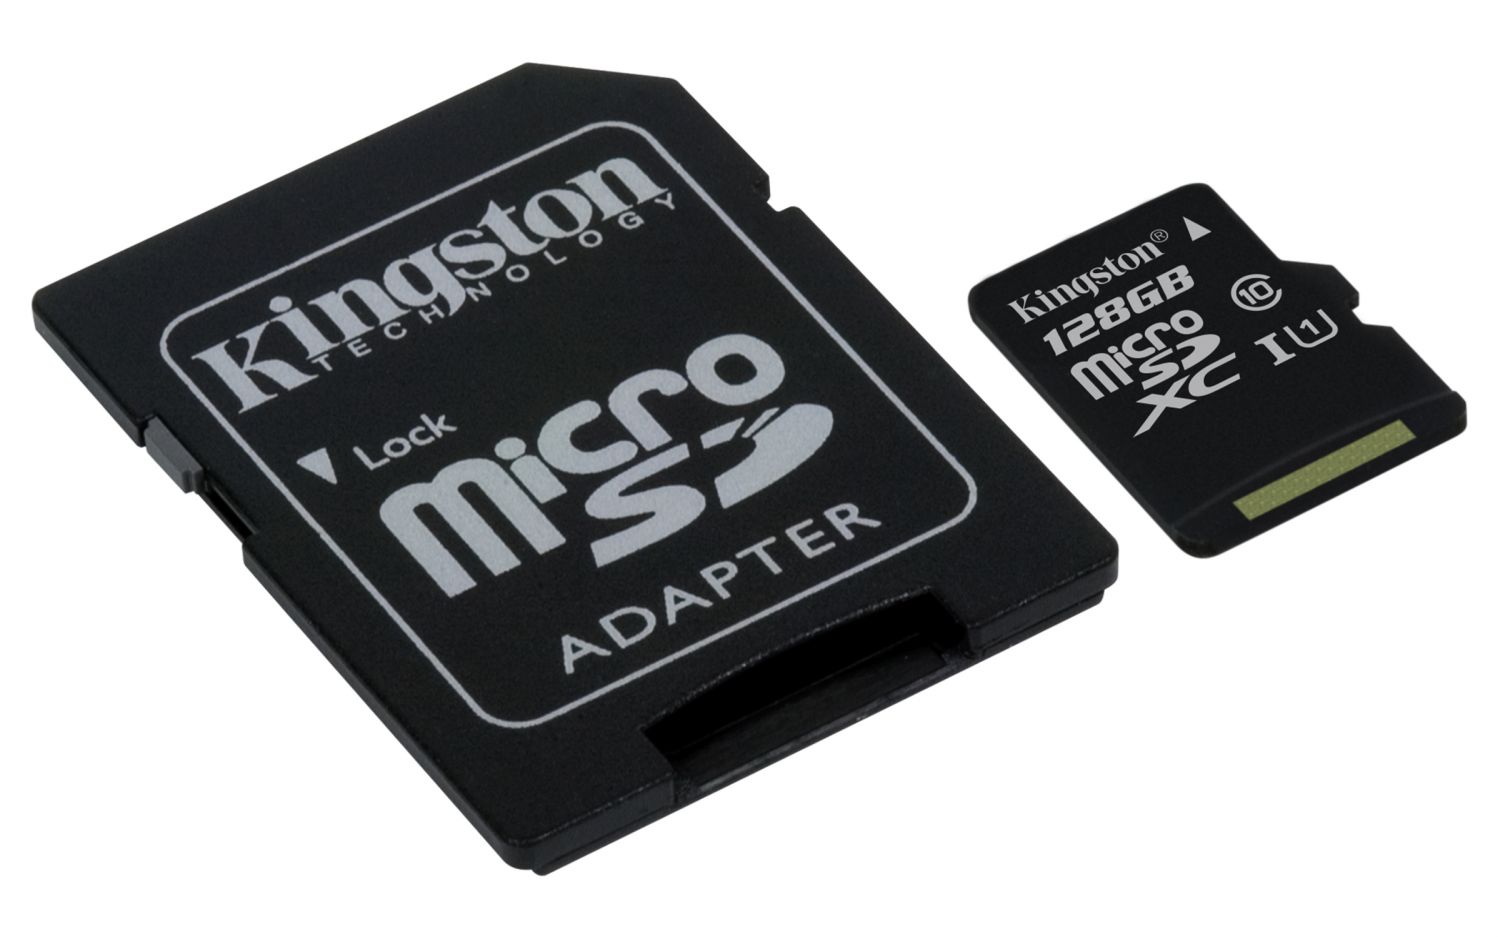 SDCS/128GB - Memoria flash Kingston Technology Canva Select memoria  128 GB MicroSDXC Clase 10 UHS-I